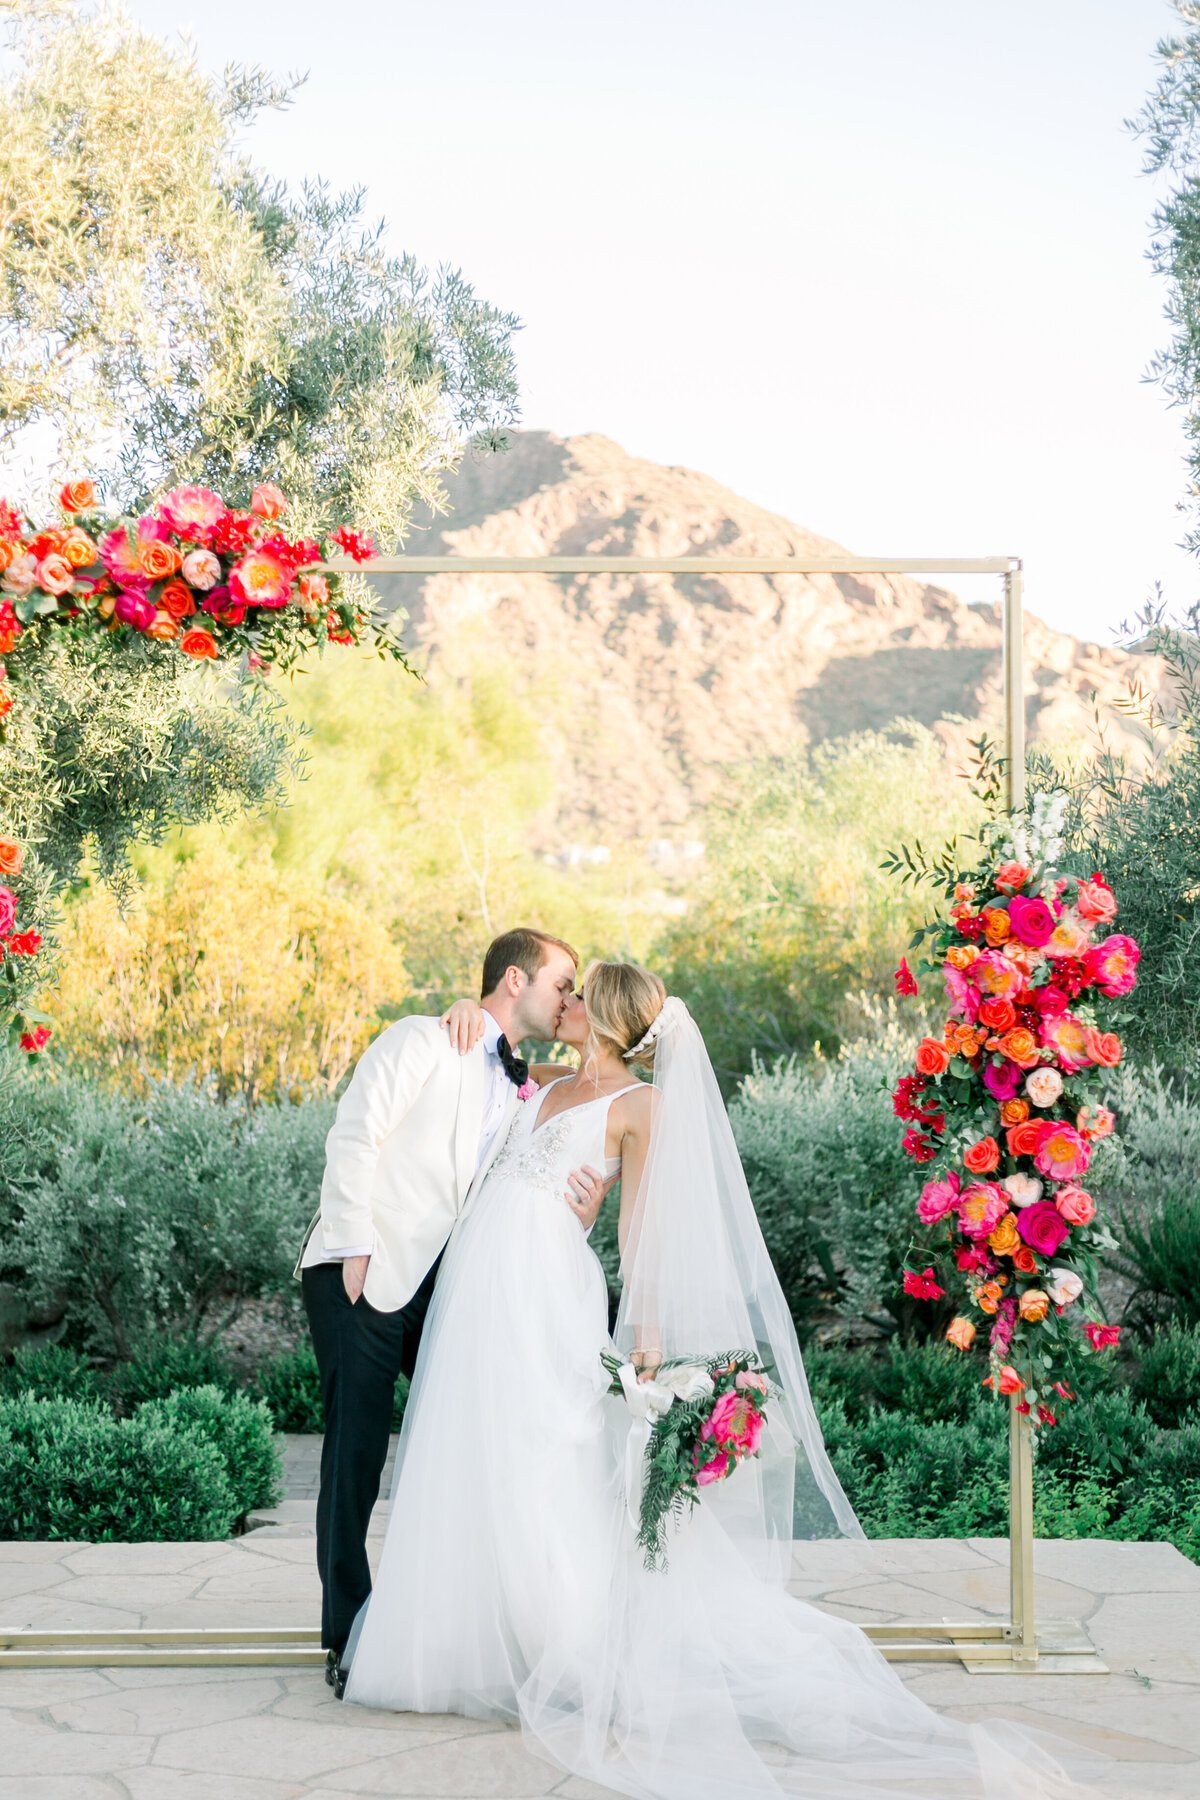 Karlie Colleen Photography - El Chorro Arizona Wedding - Kylie & Doug-72